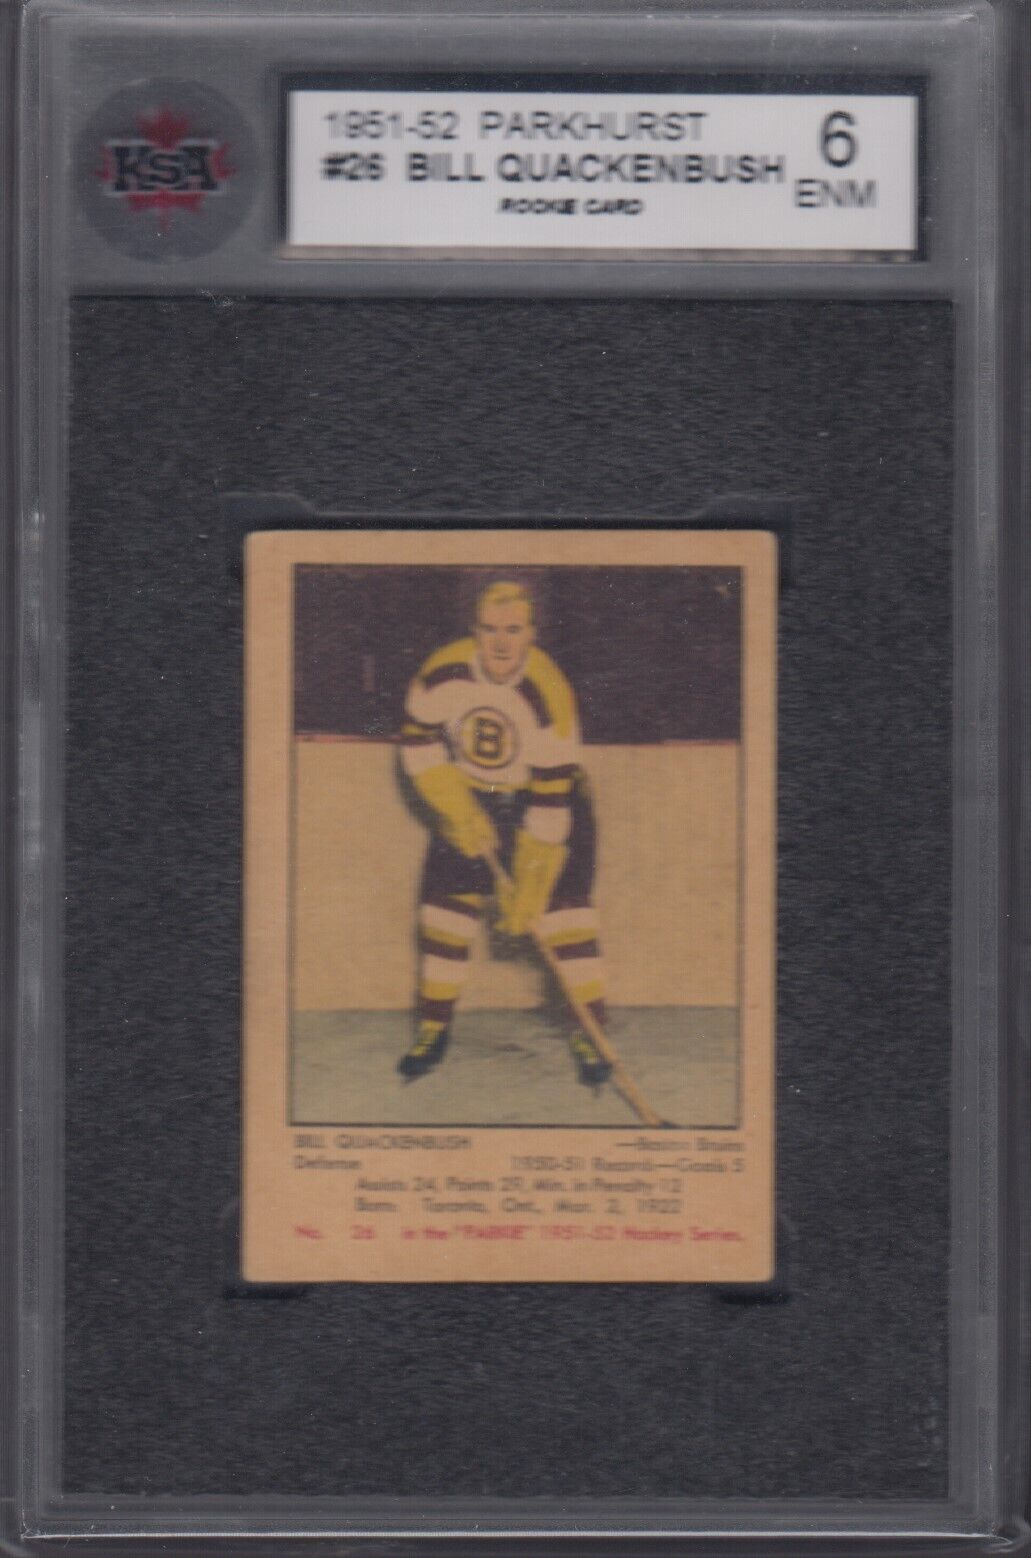 BILL QUACKENBUSH, 1951 Parkhurst #26, KSA 6, Rookie Card. rookie card picture